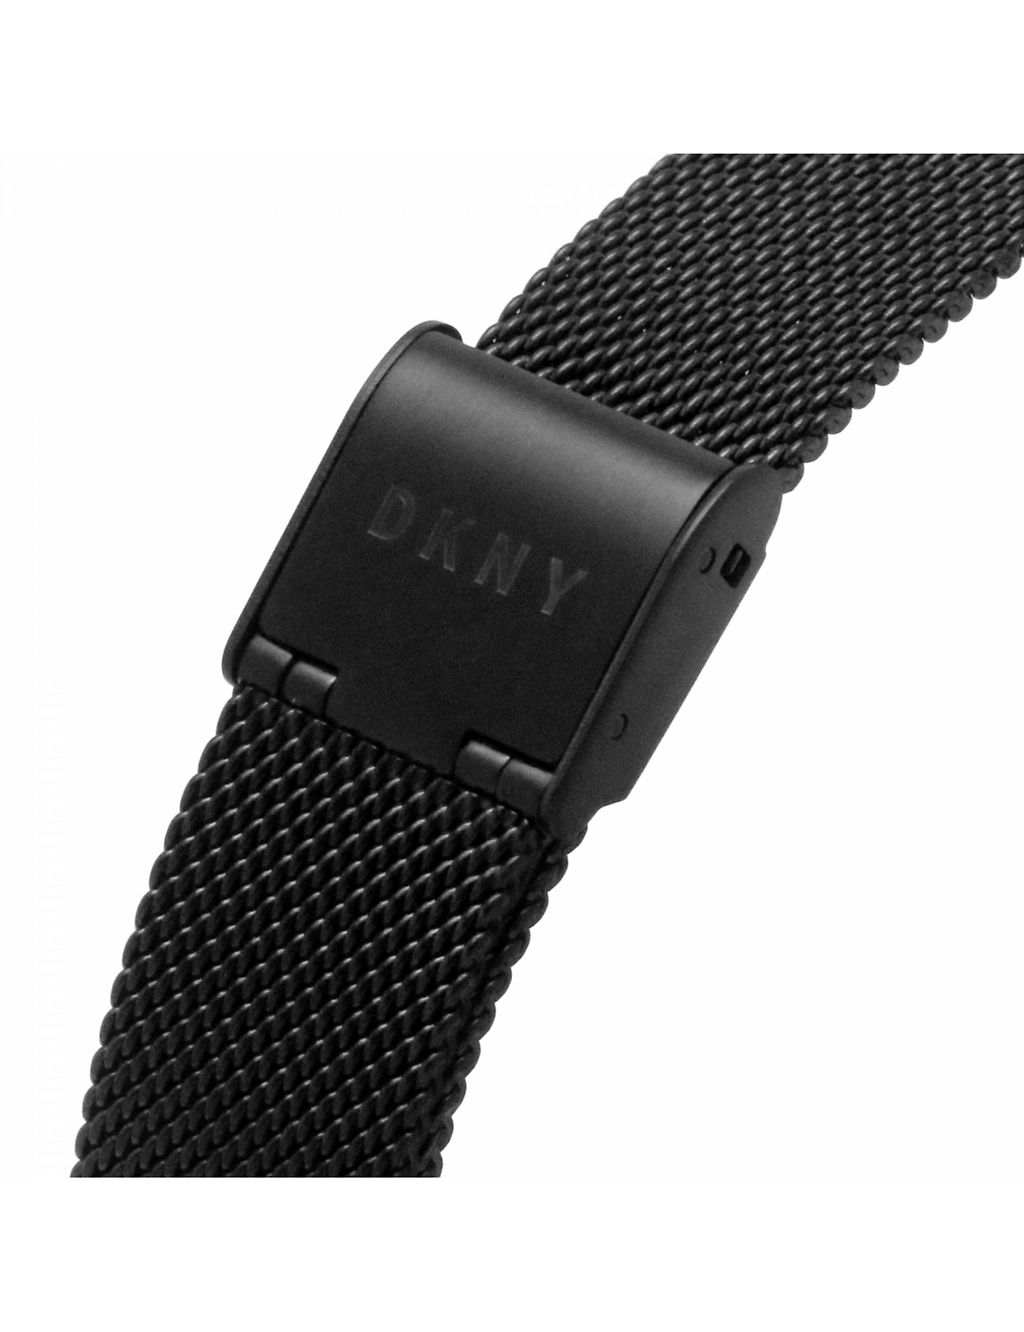 DKNY The Modernist Black Watch 7 of 7